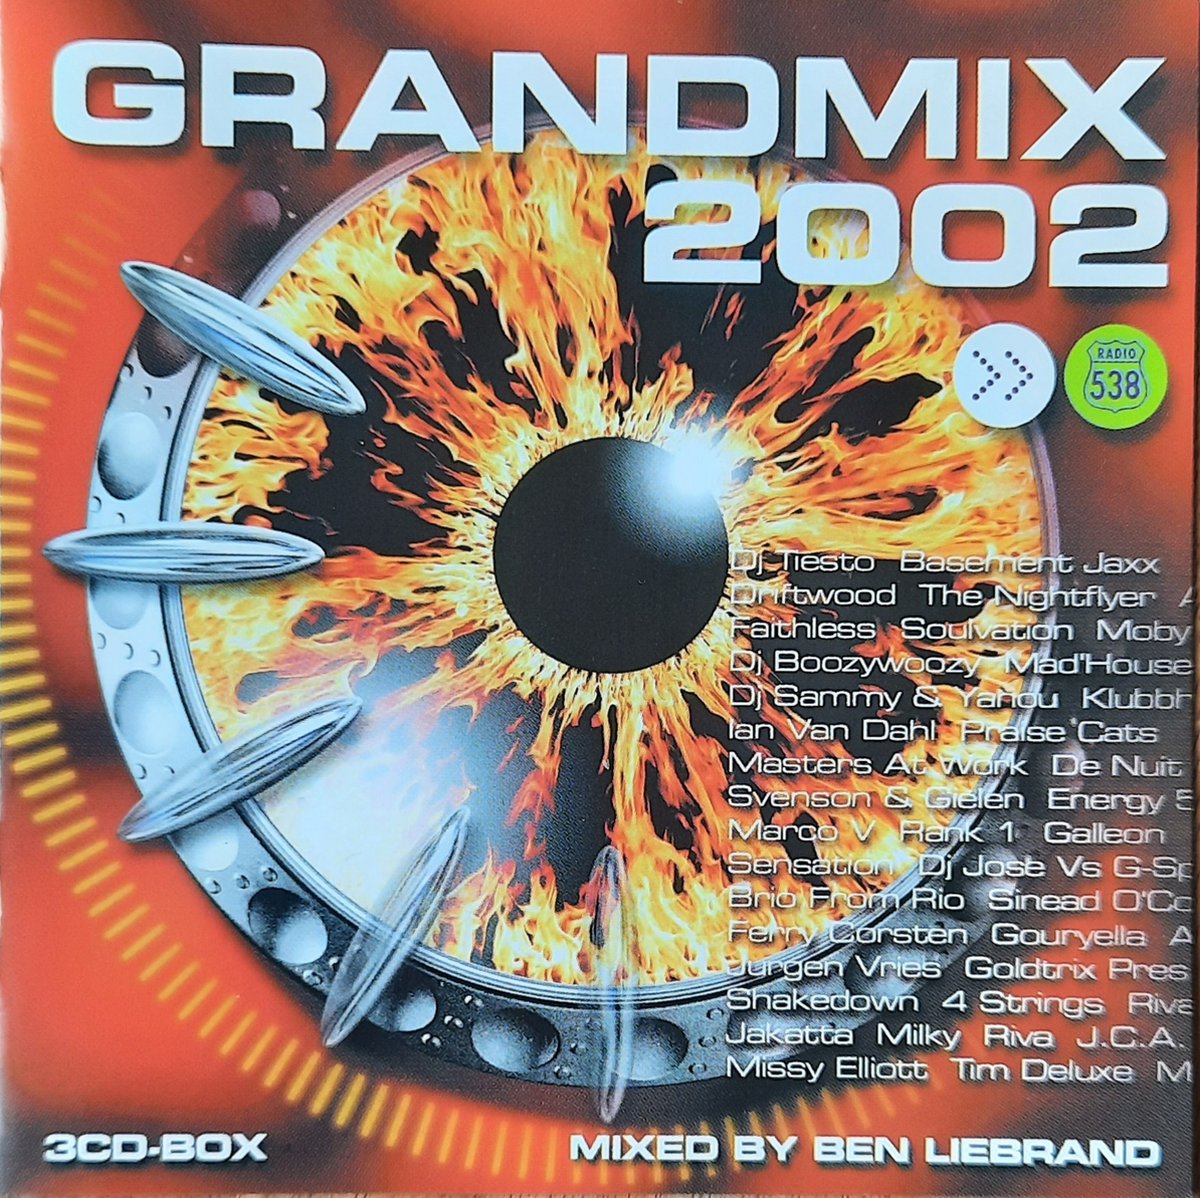 Grandmix 2002 - various artists